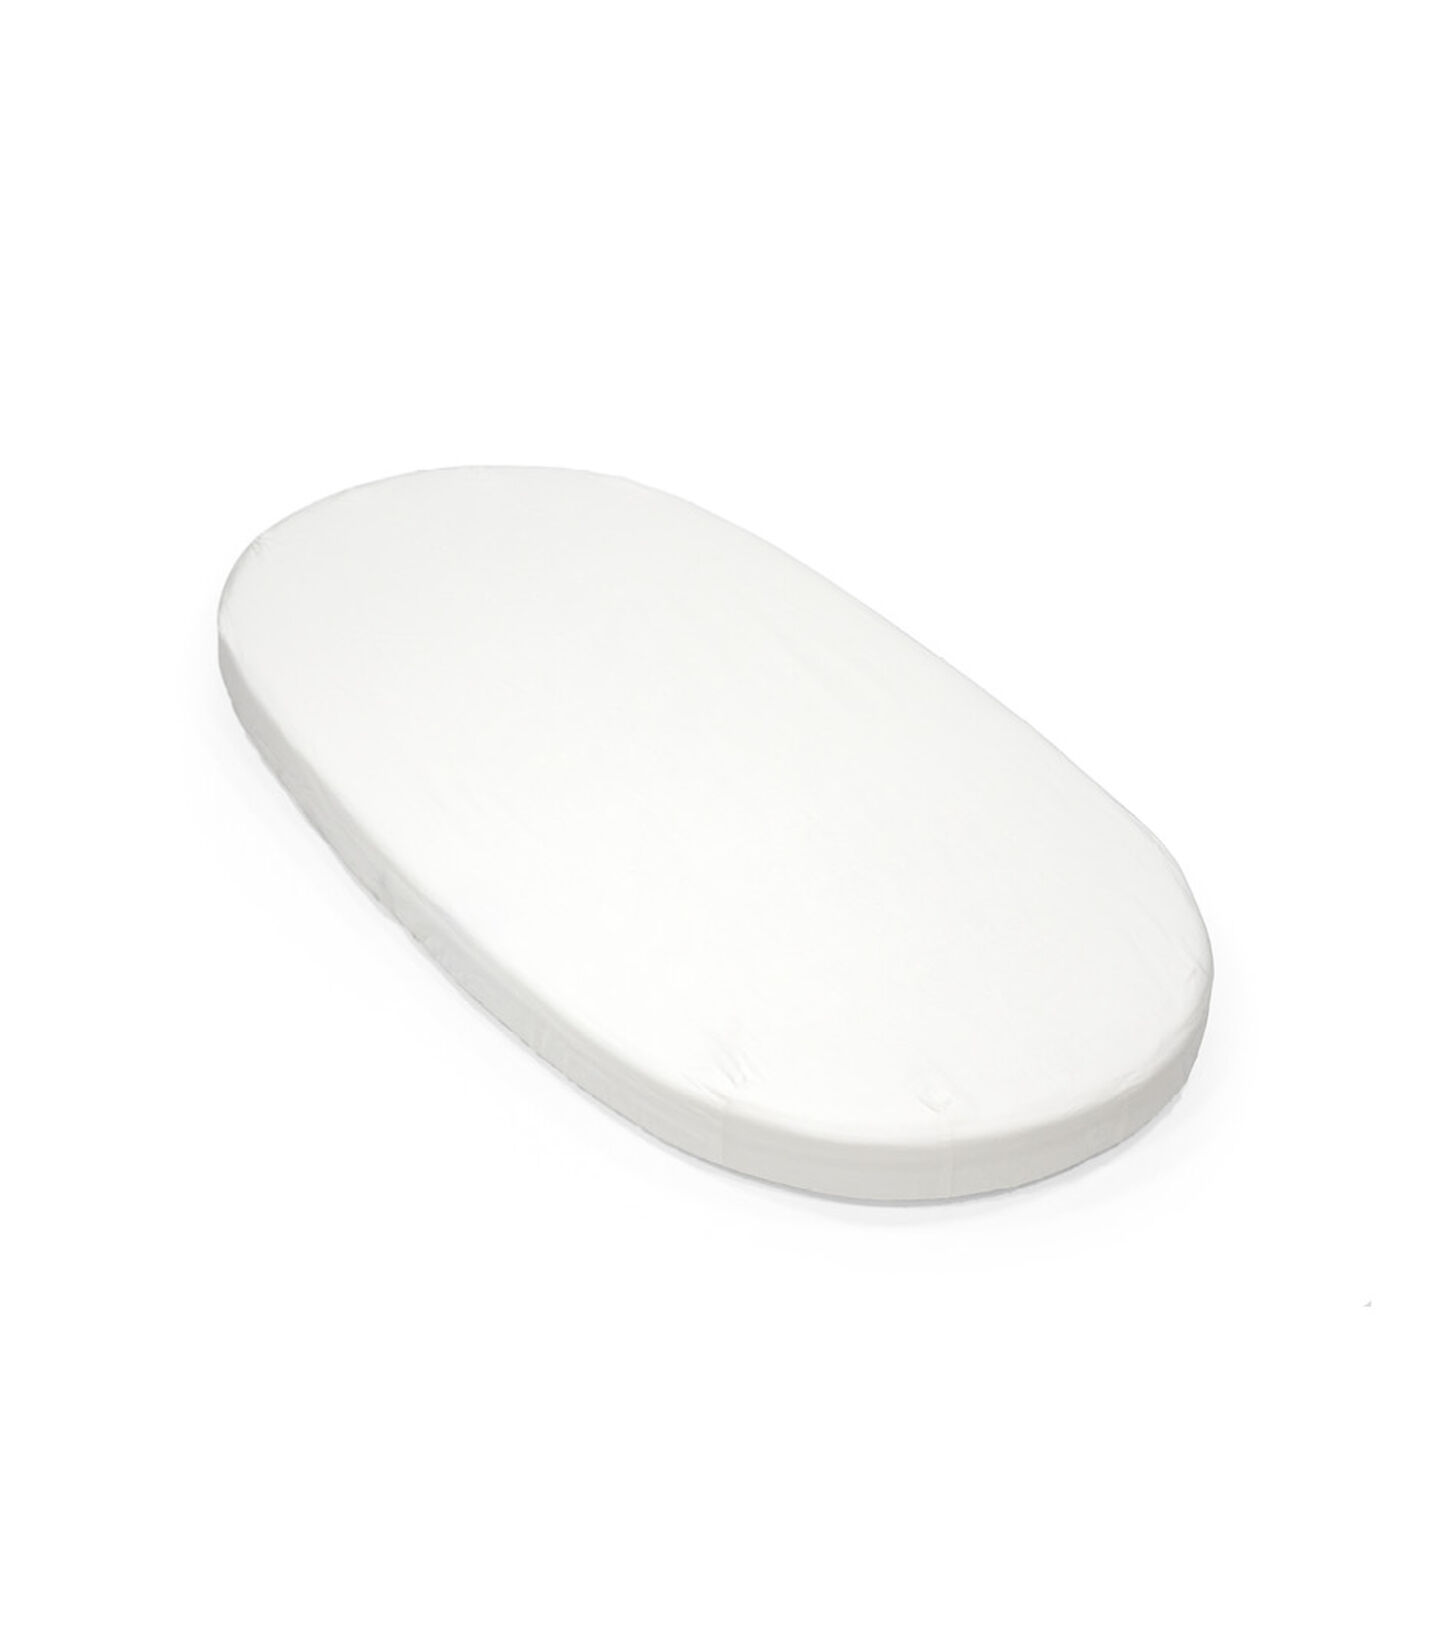 Stokke® Sleepi™ Bed Fitted Sheet V3 White, White, mainview view 1